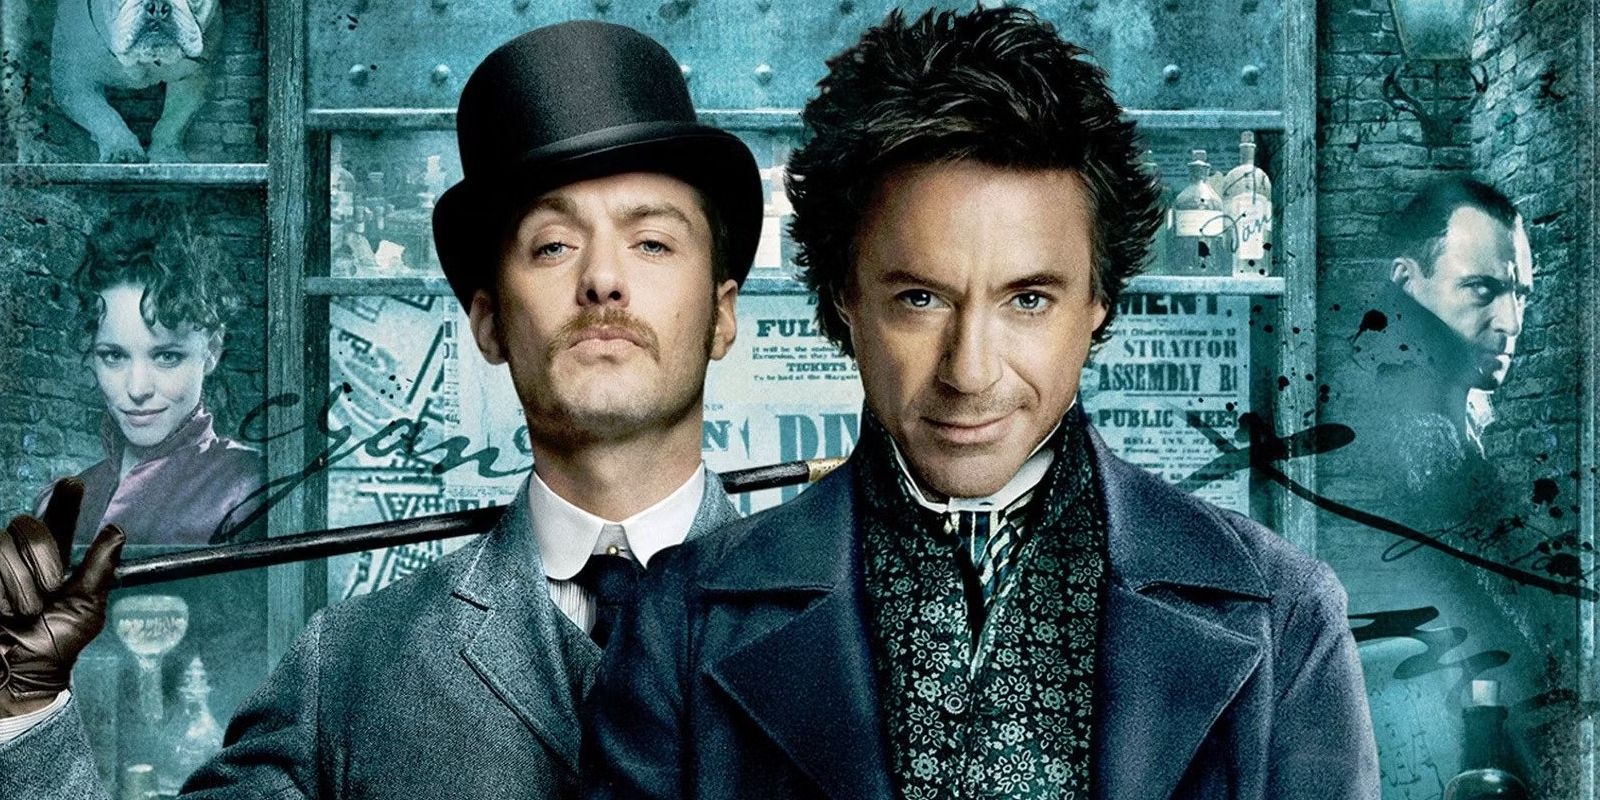 Robert Downey Jr. as Sherlock Holmes and Jude Law as Dr. Watson